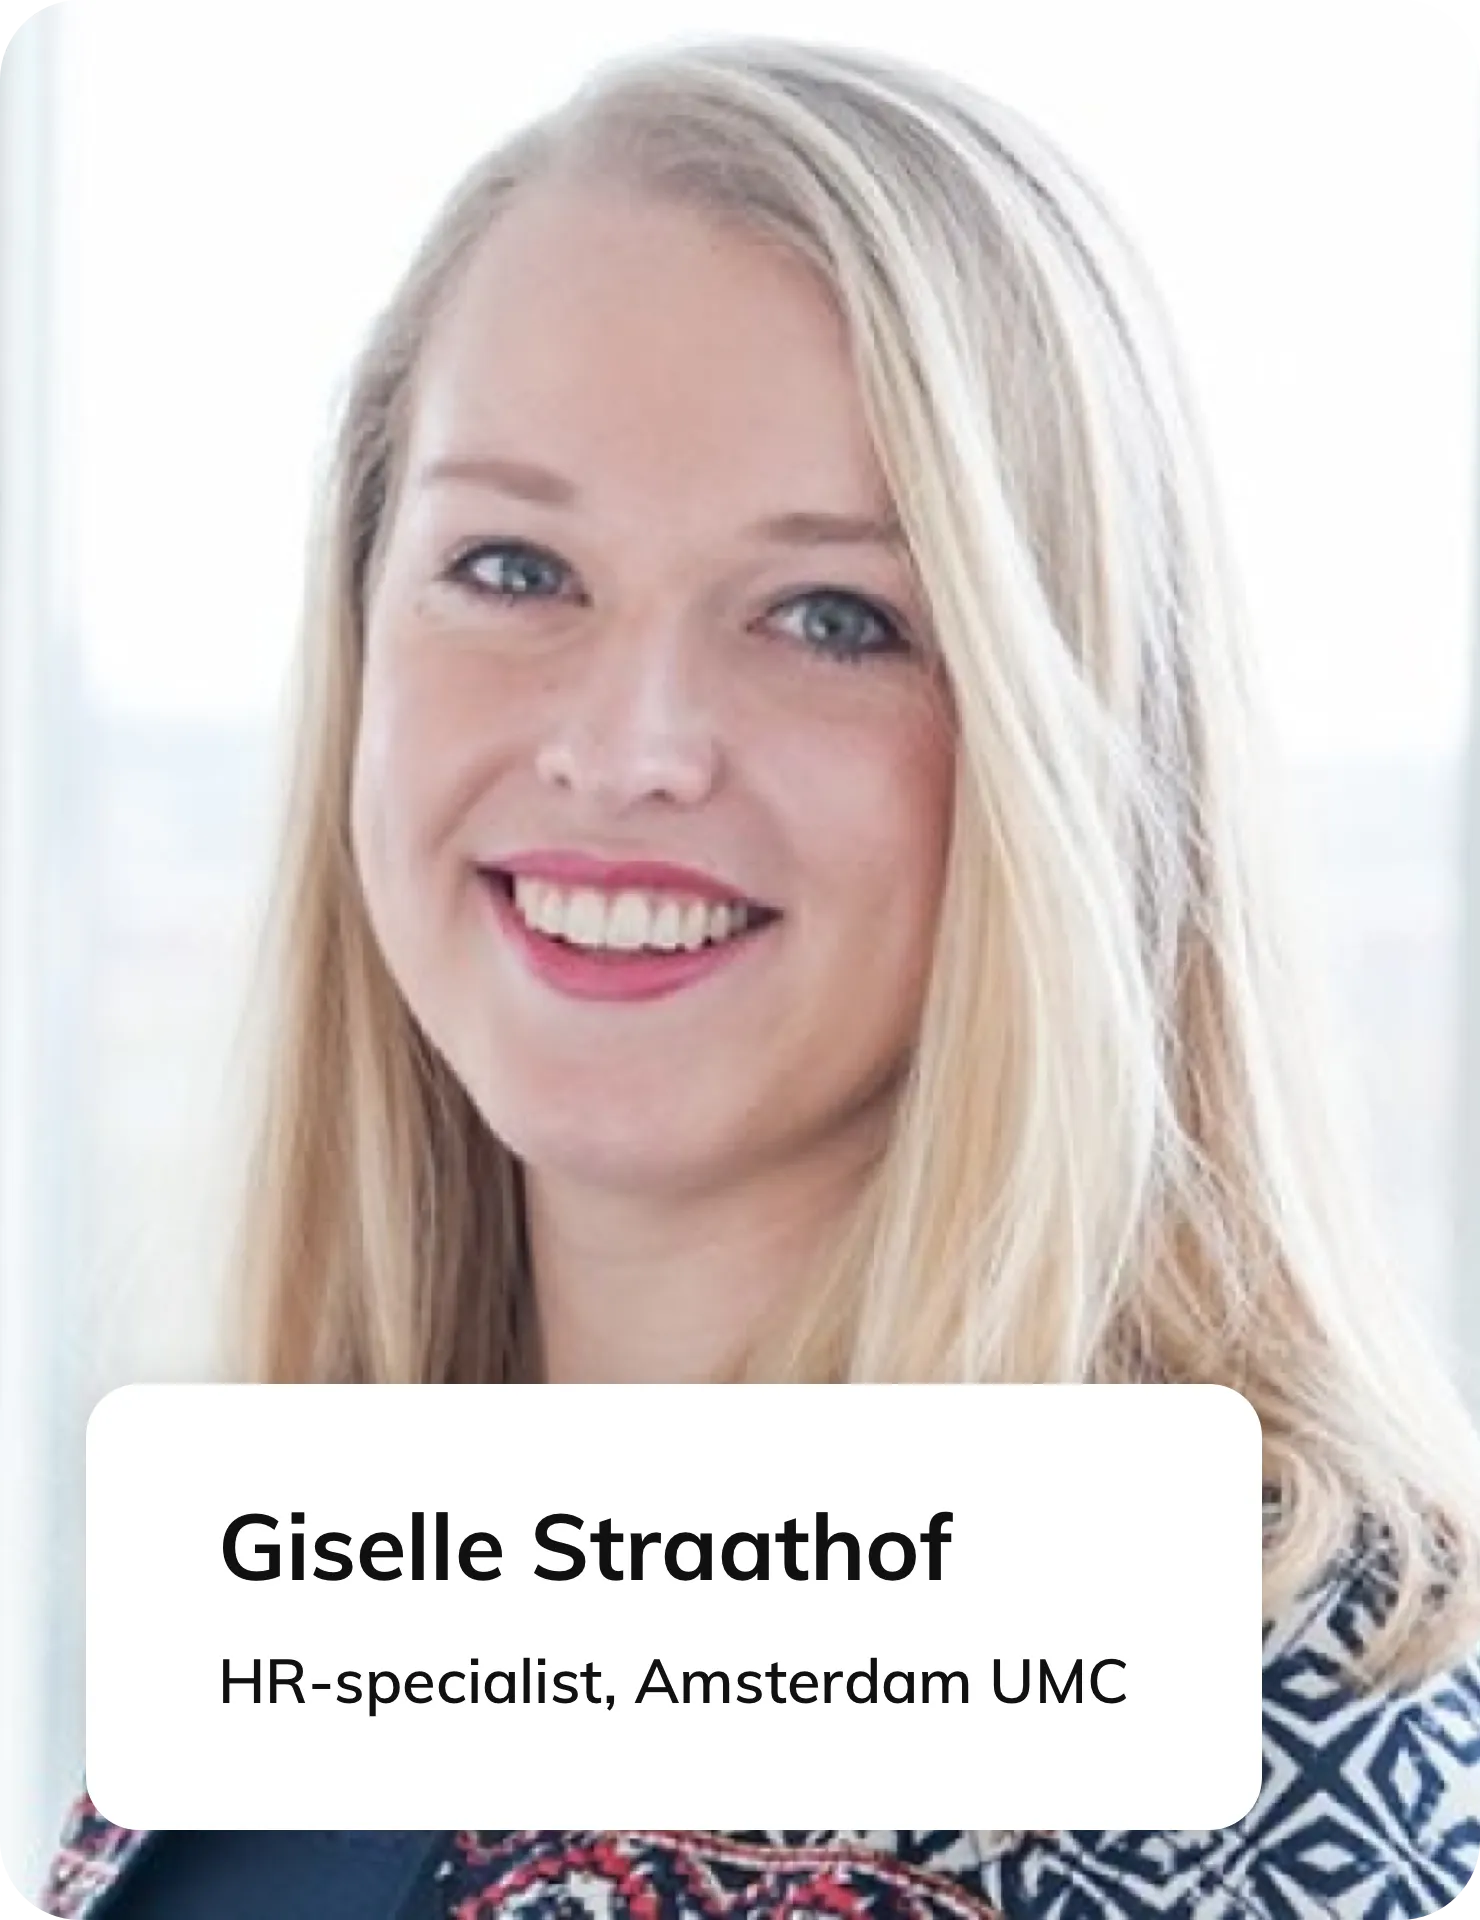 Giselle Straathof, HR-specialist bij Amsterdam UMC